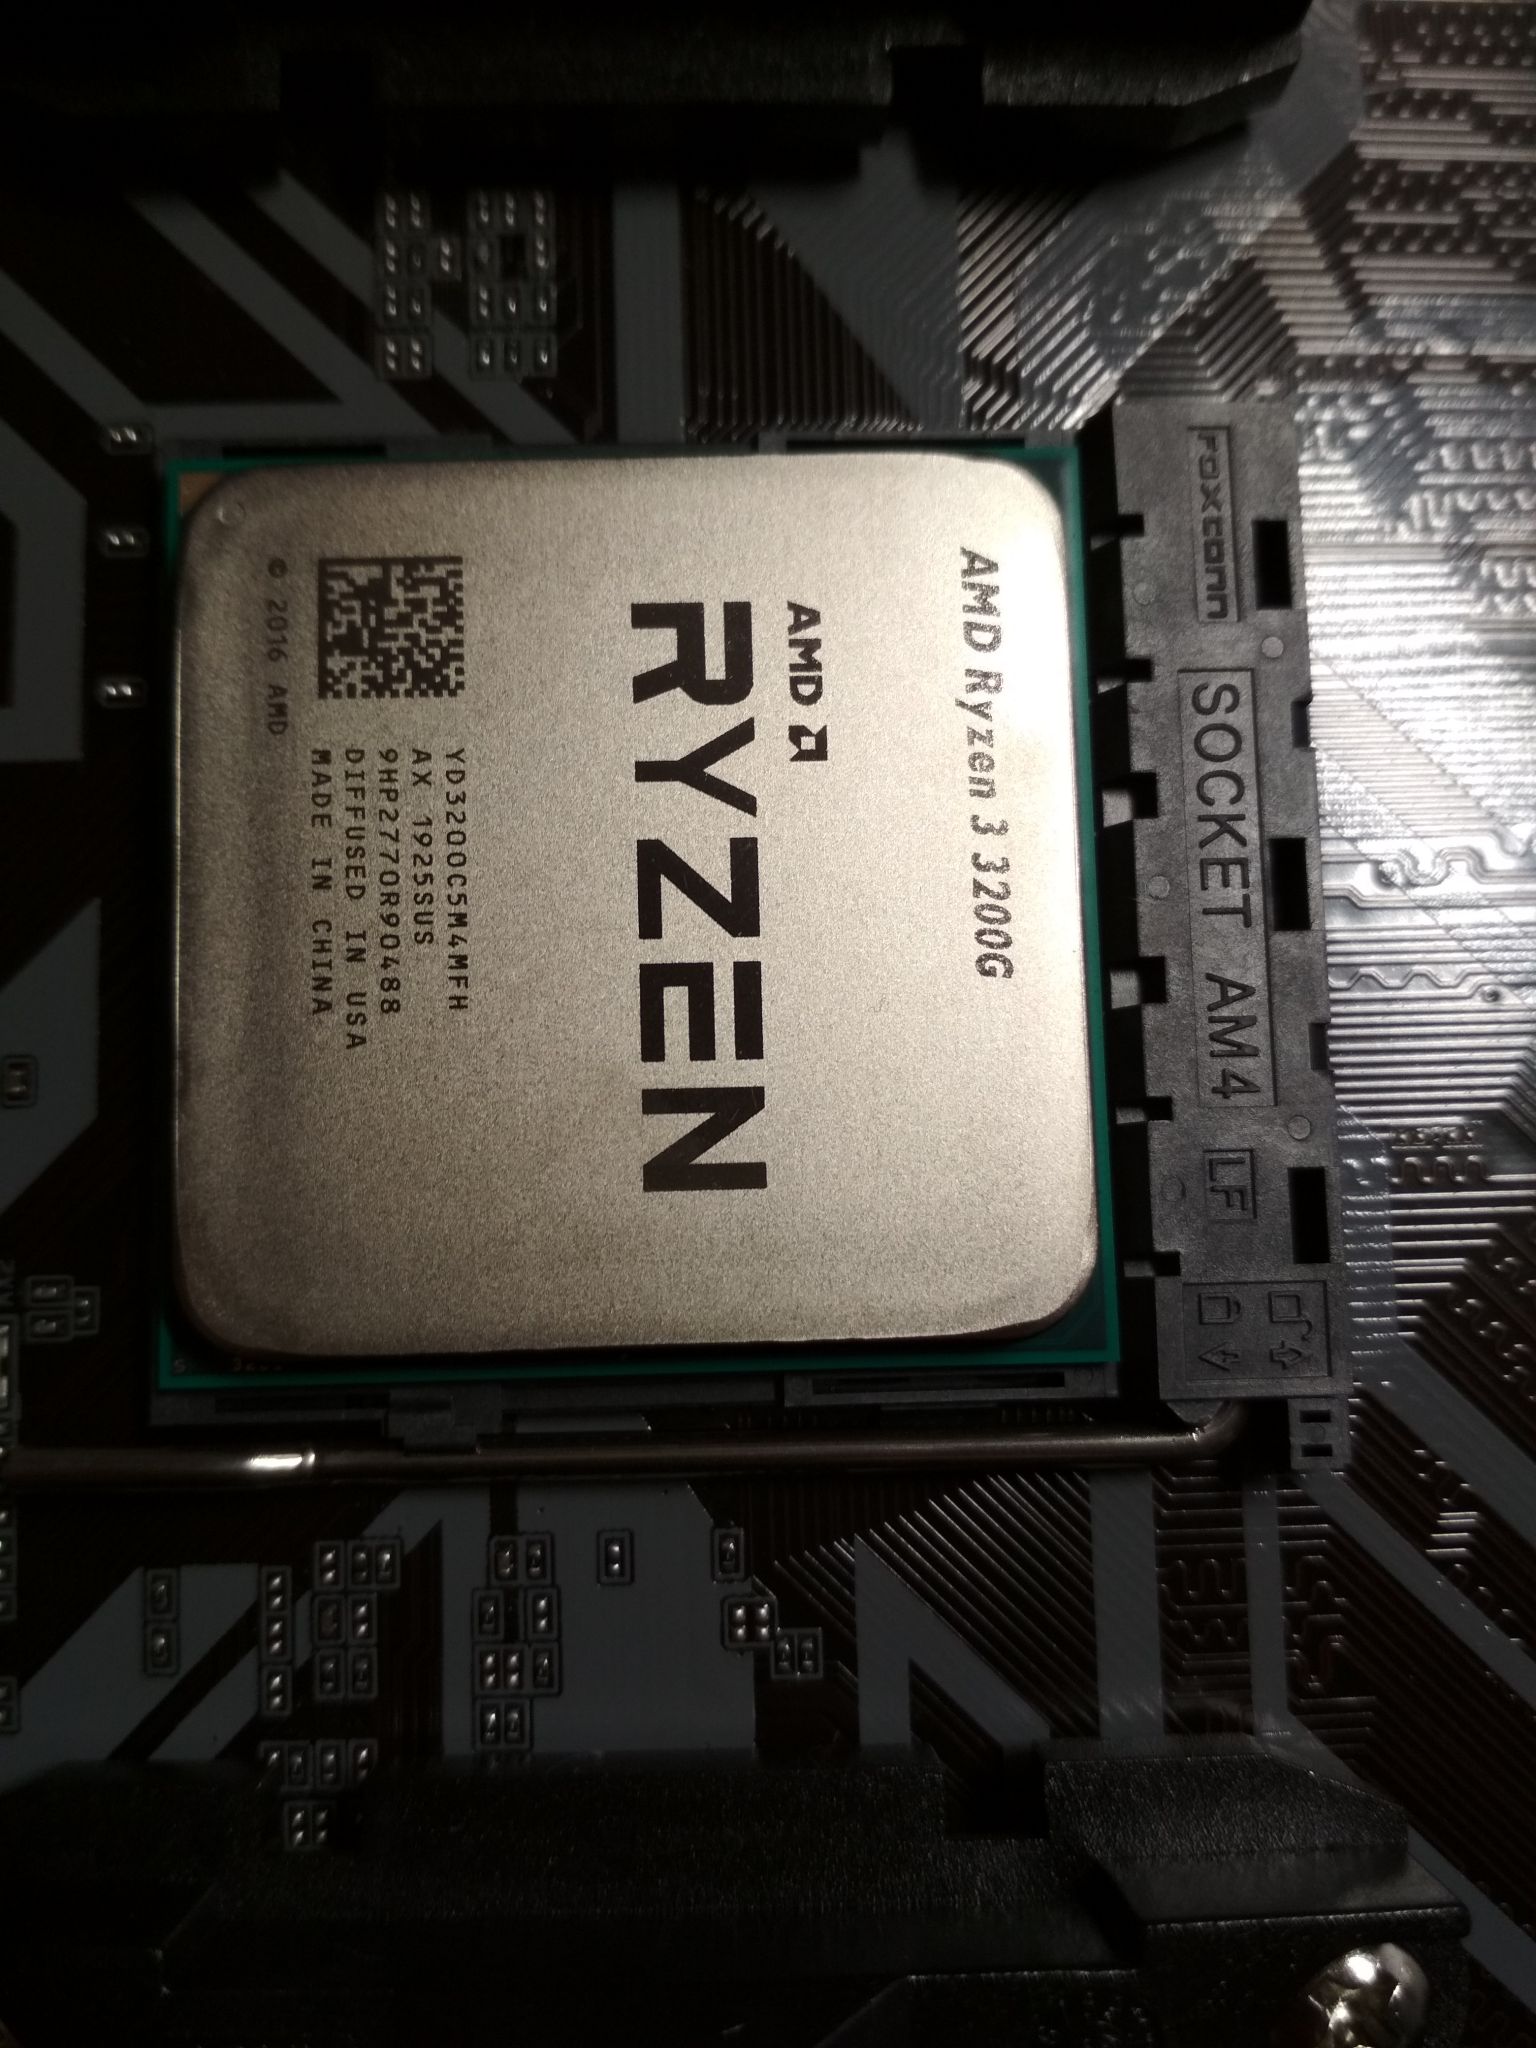 Райзен 9 купить. Процессор AMD Ryzen 3 3200g. Процессор AMD Ryzen 3 3200g am4. AMD Ryzen 3 Pro 3200g. Ryzen 3 3200g vega8.